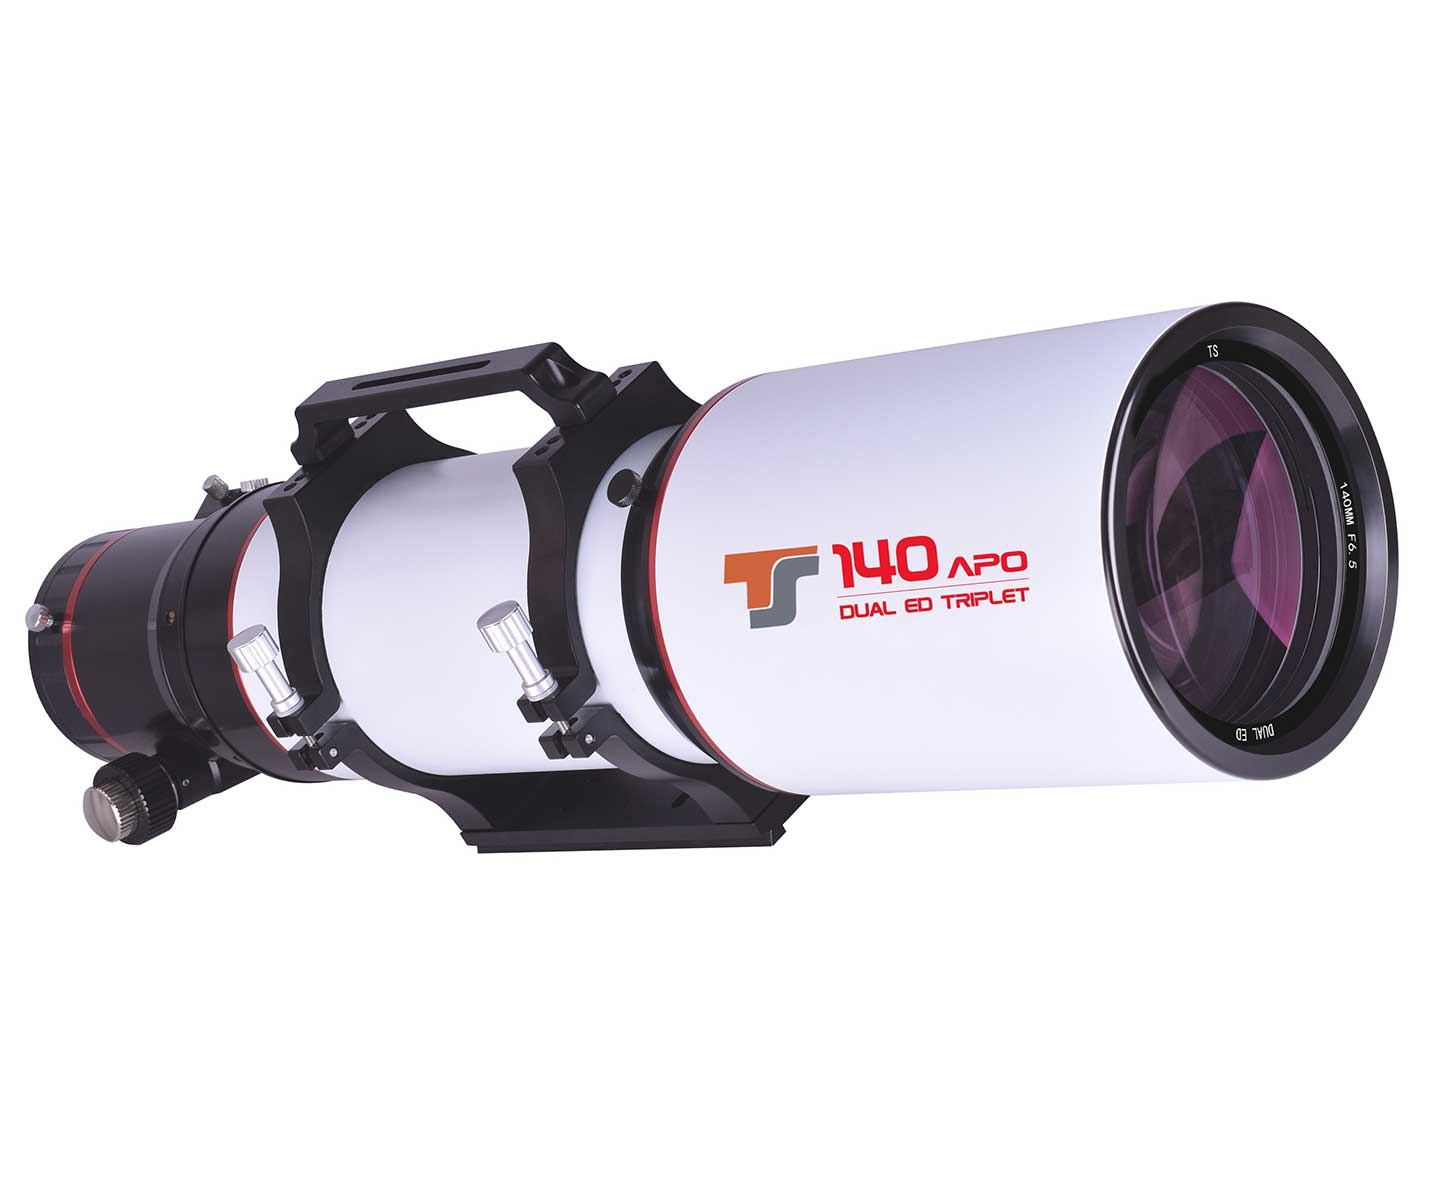 
TS-Optics Photoline 140 mm f/6.5 Super Triplet Apo with 2 ED elements [EN]
